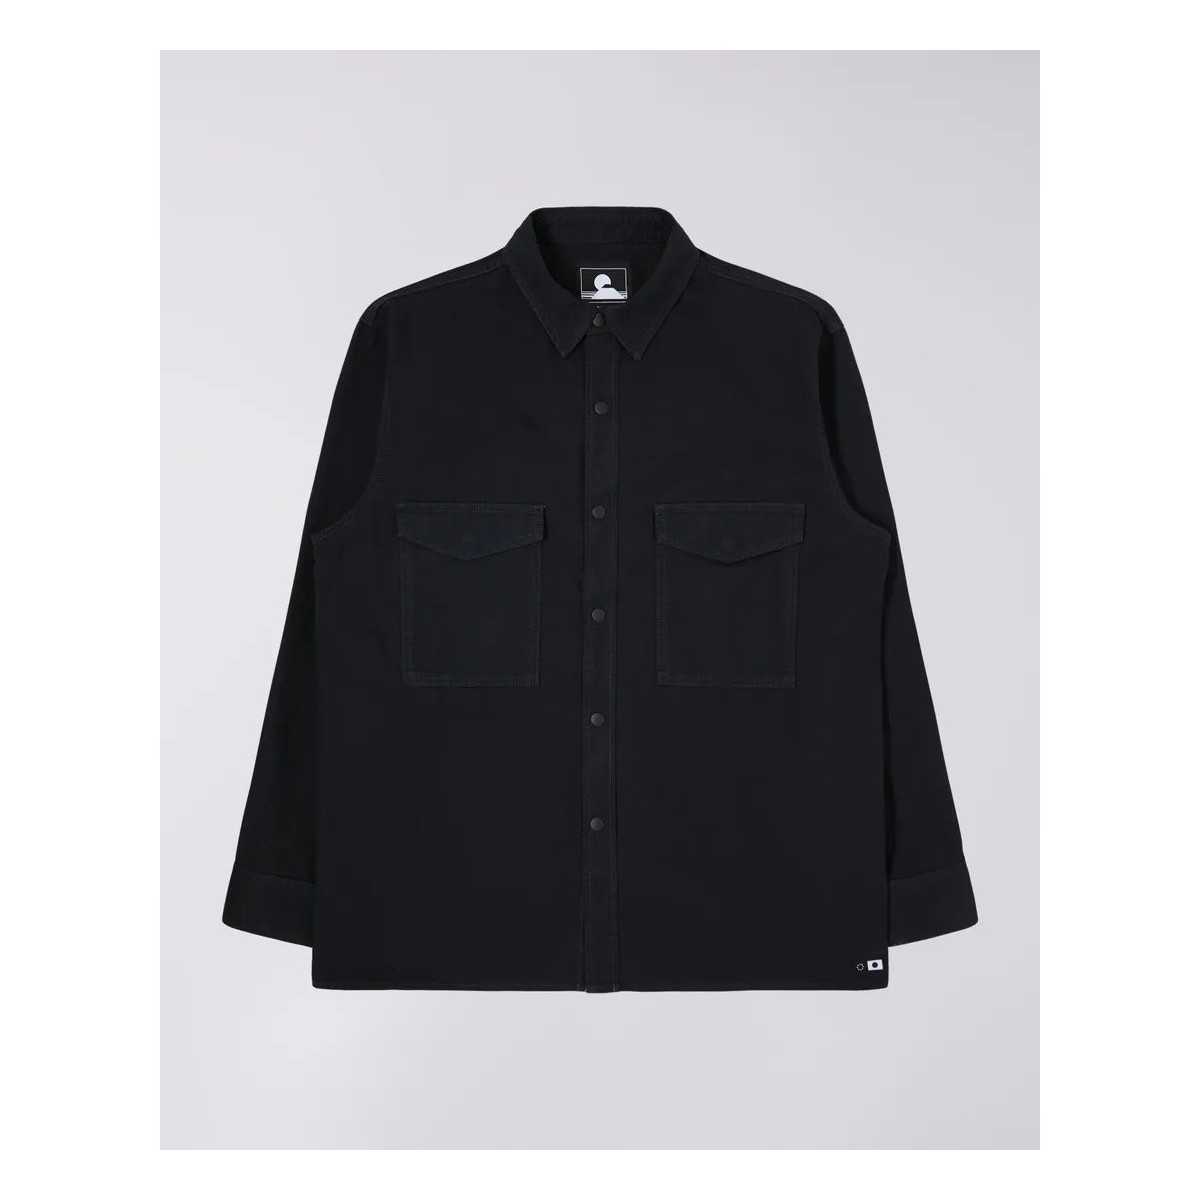 textil Hombre Camisas manga larga Edwin I030301 BIG SHIRT-89 BLACK Negro